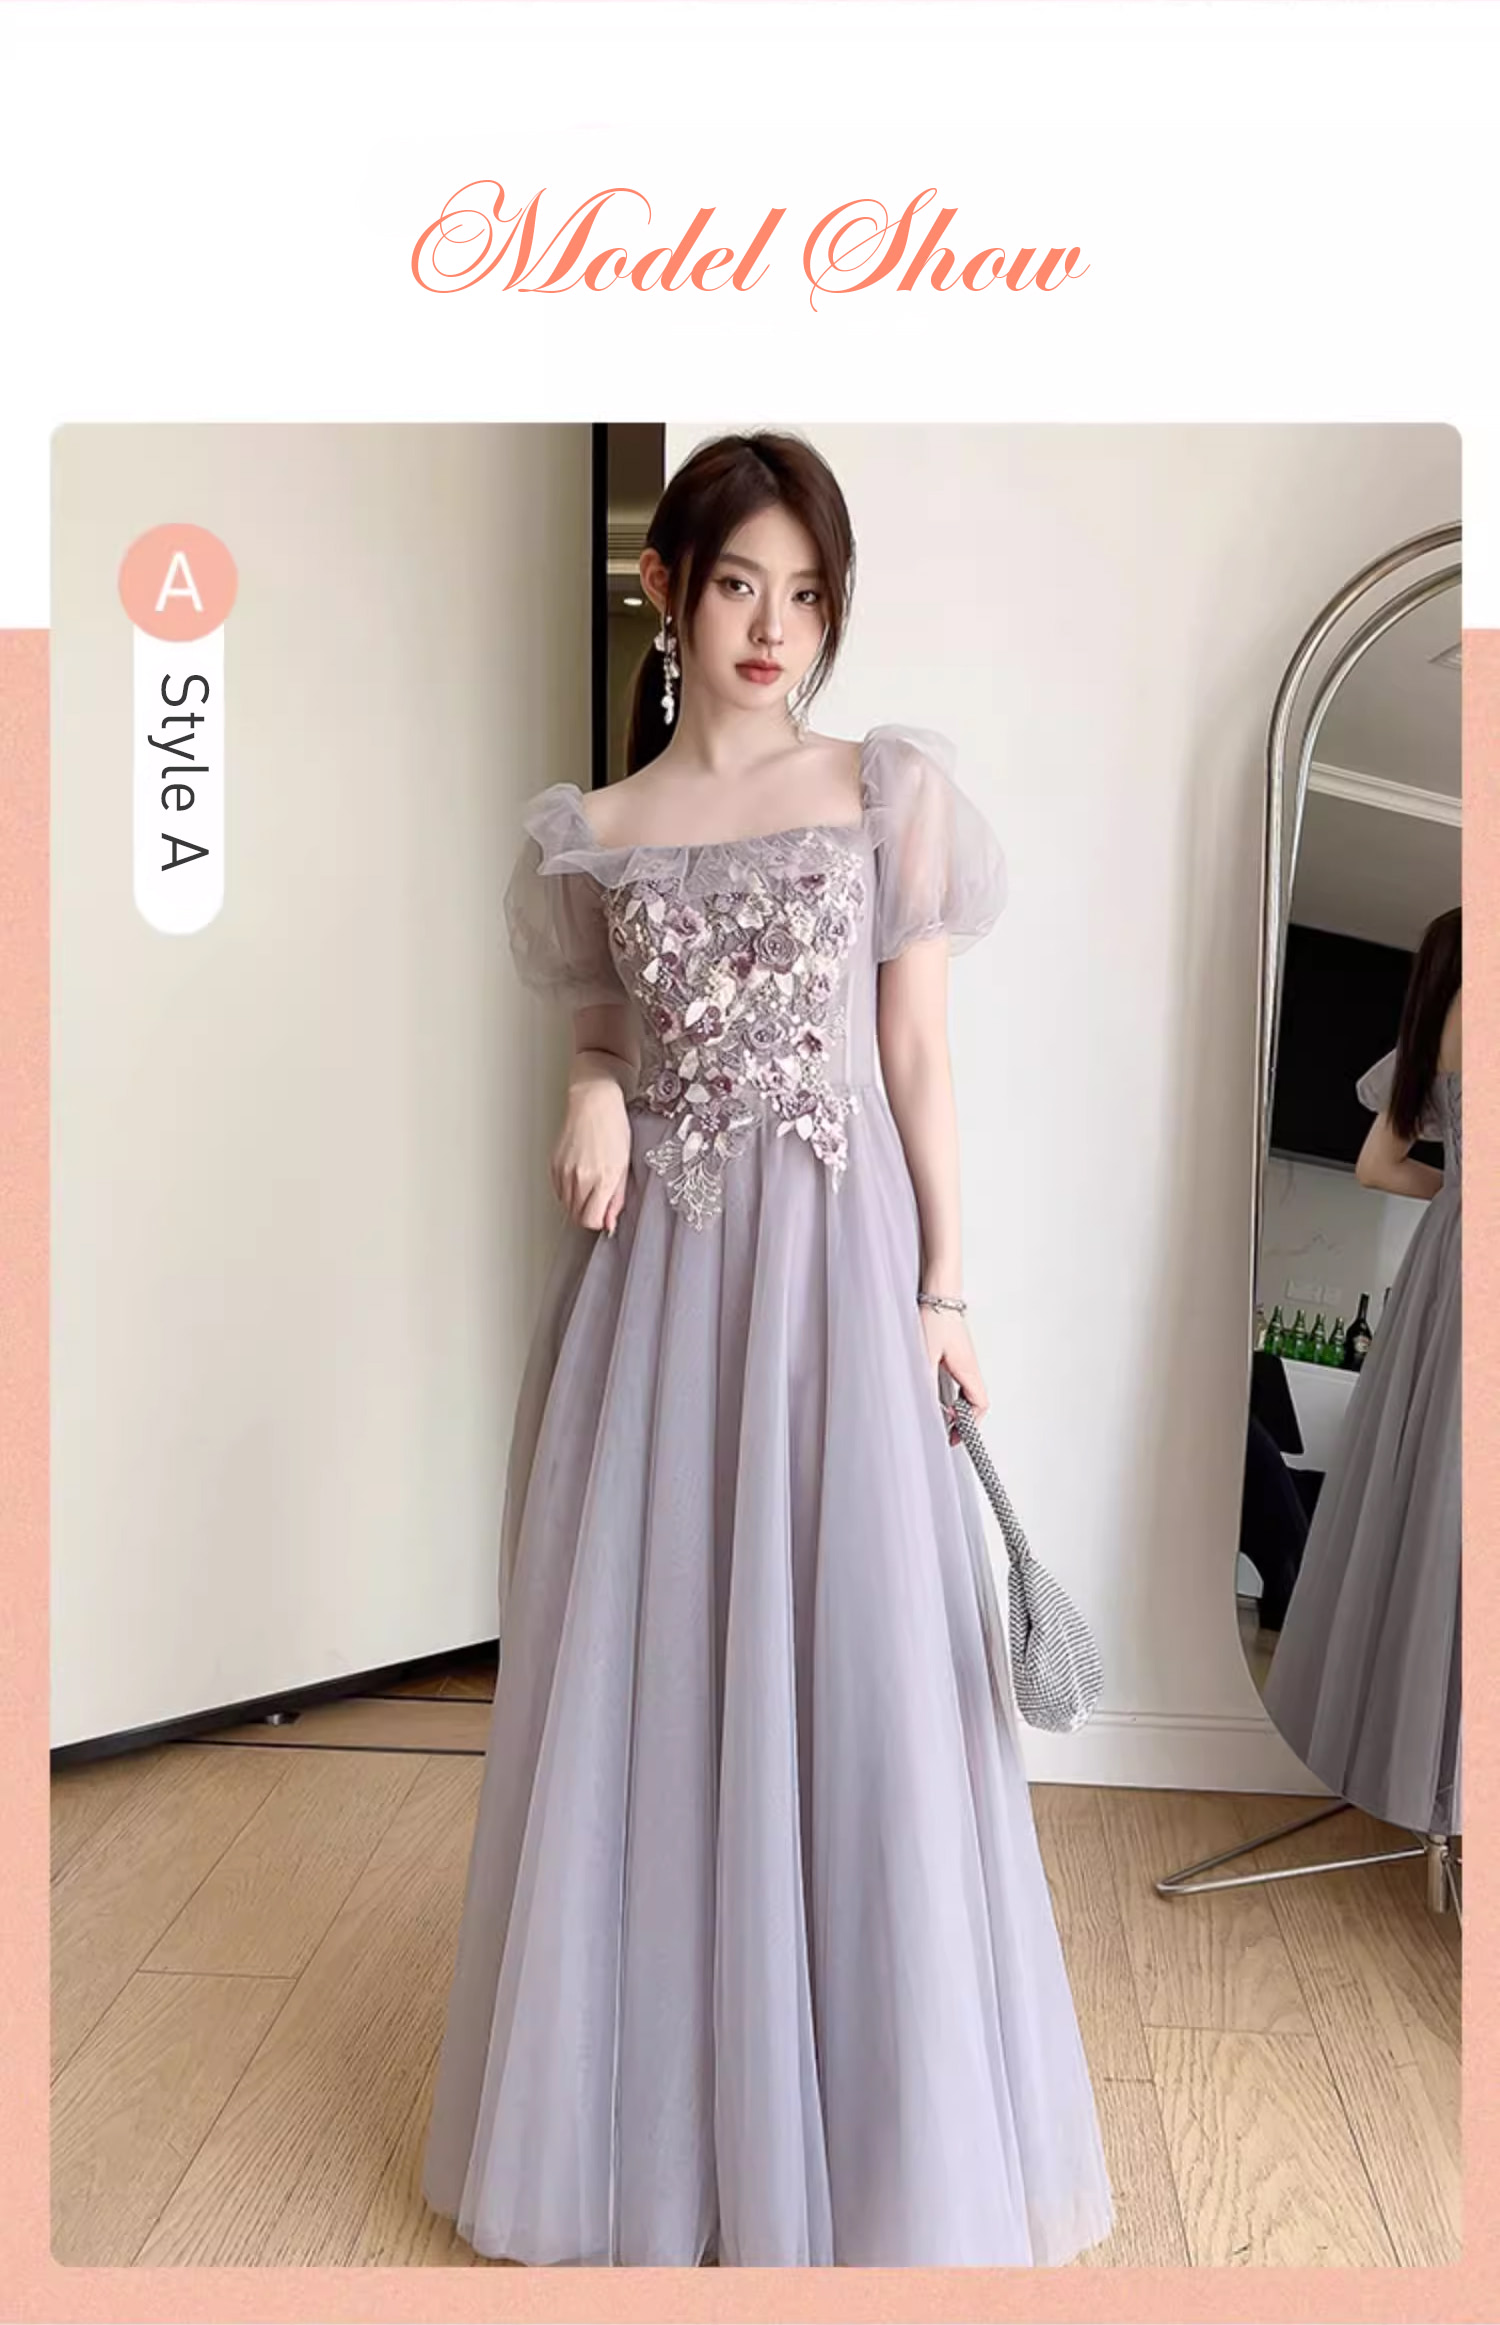 Fairy-Grayish-Purple-Floral-Embroidery-Wedding-Guest-Bridesmaid-Dress13